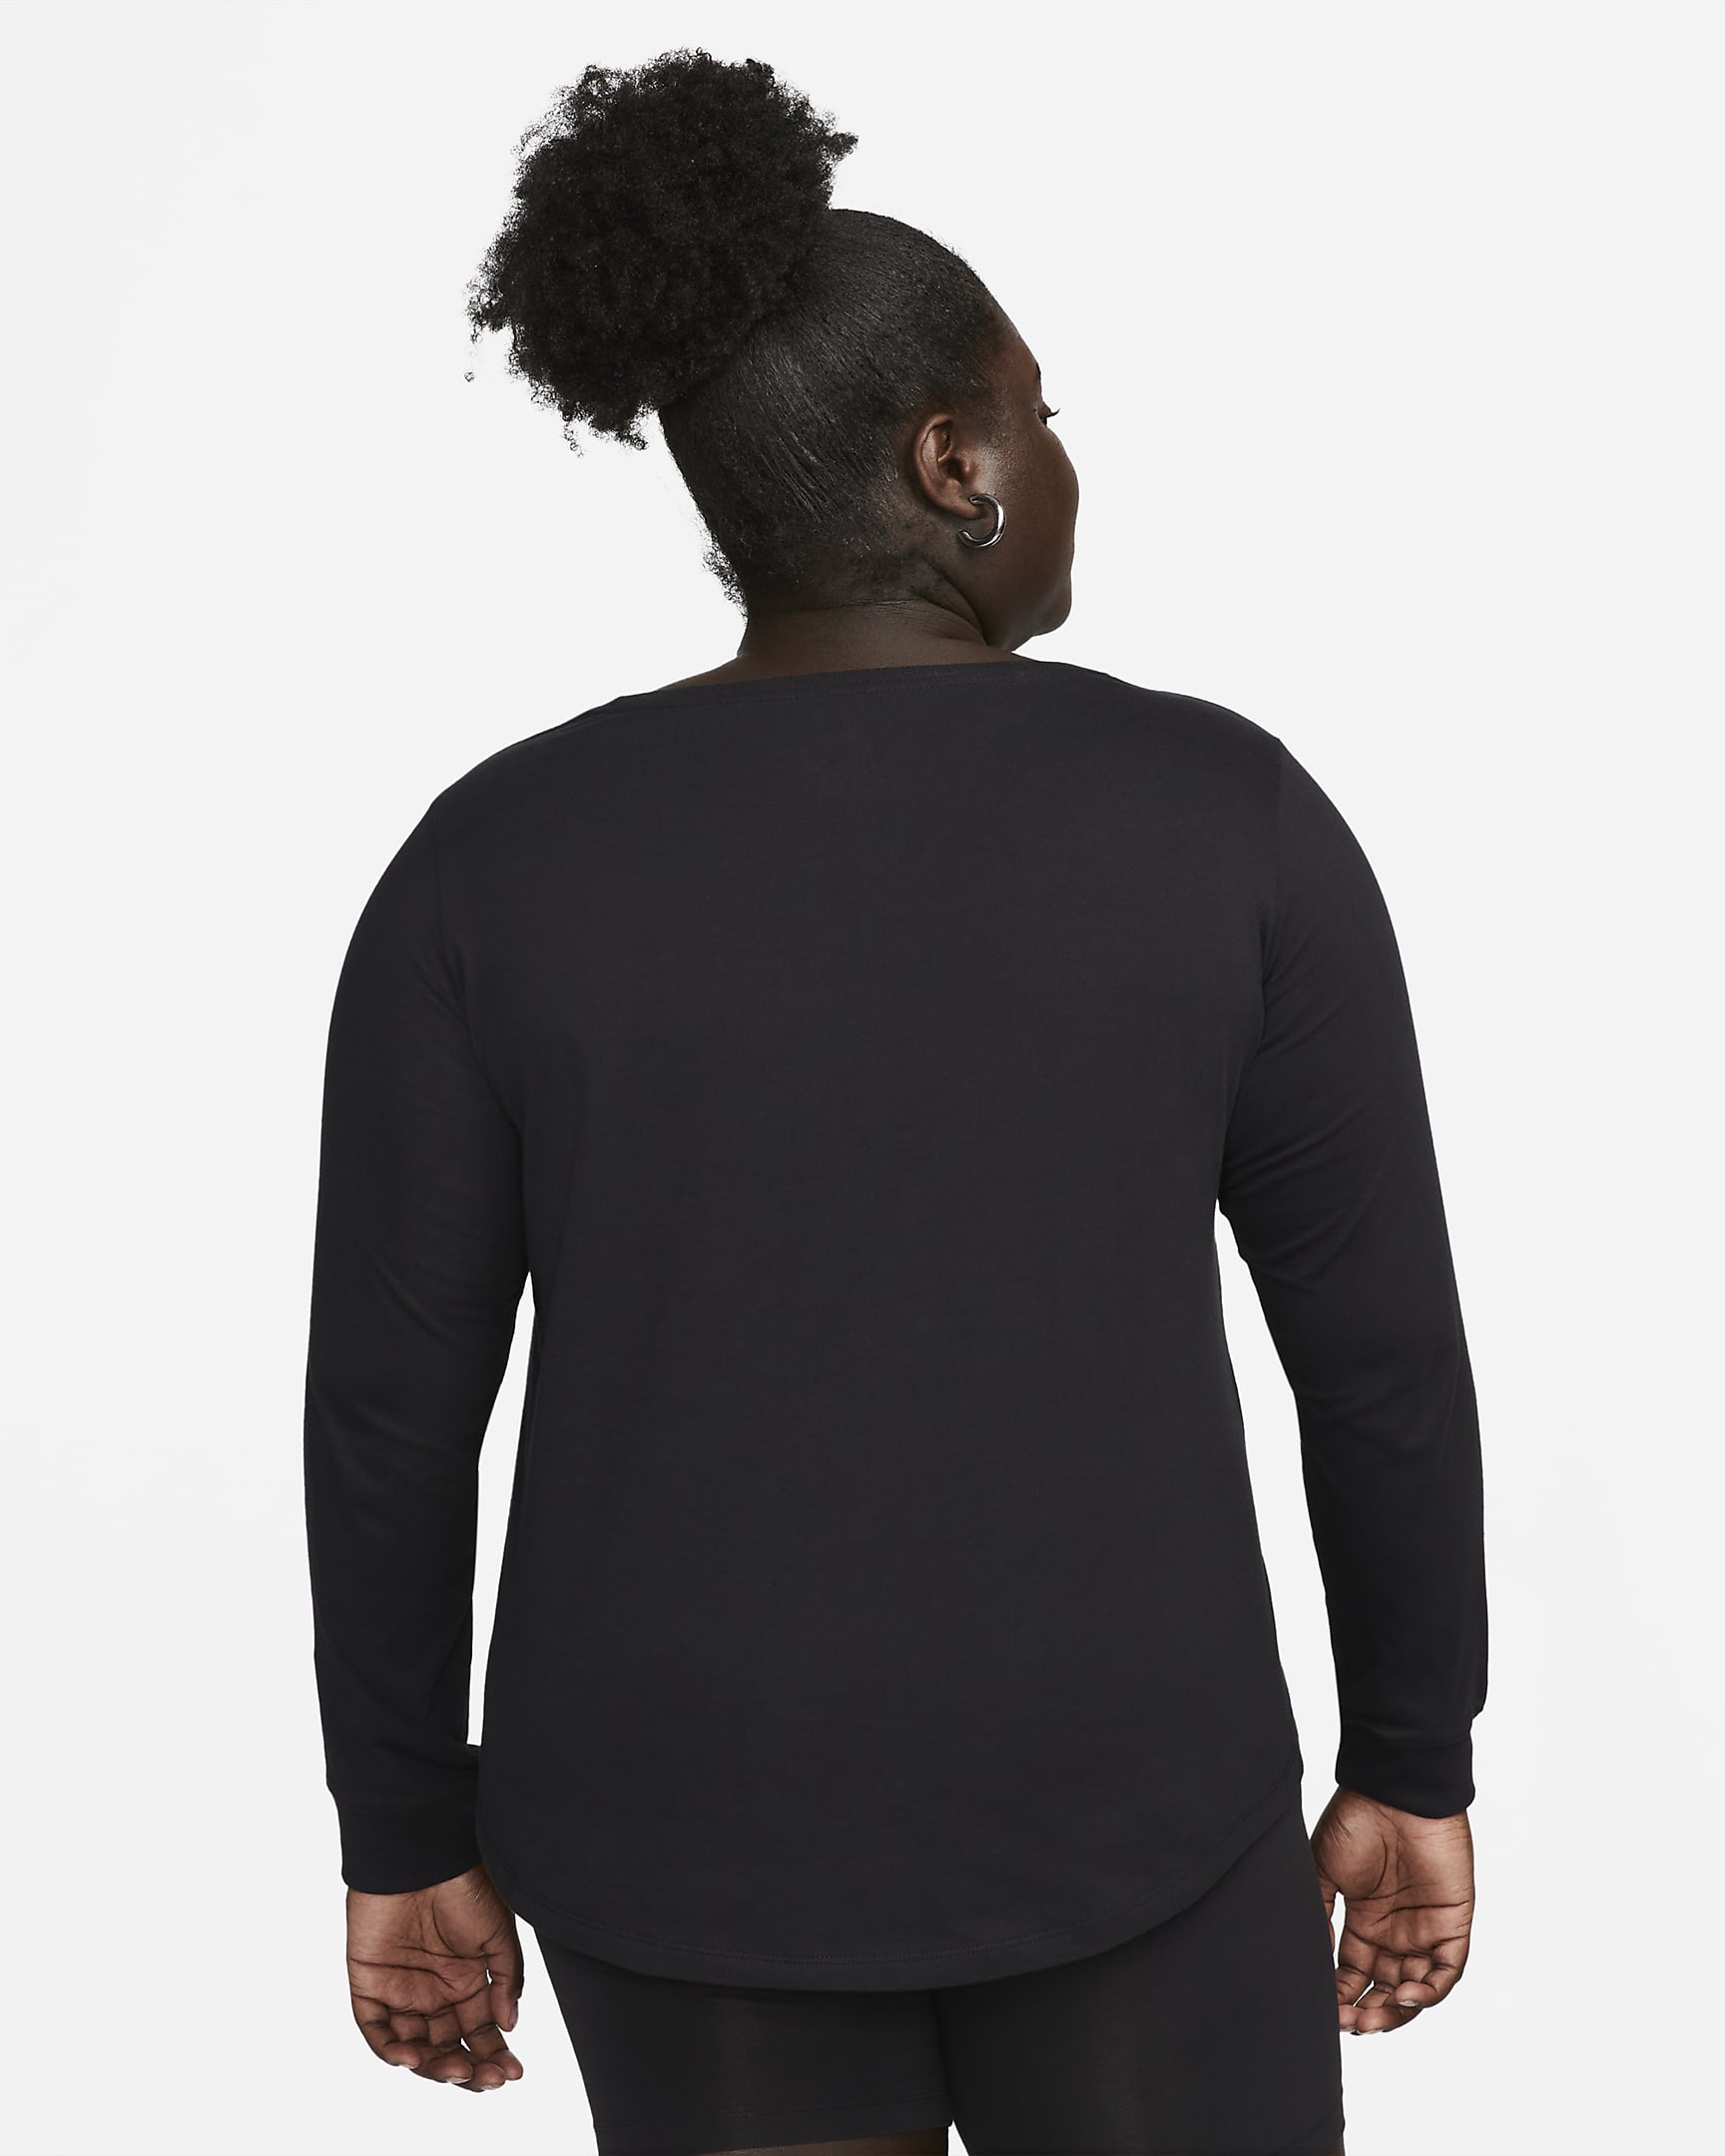 Nike Sportswear Women's Long-Sleeve T-Shirt (Plus Size). Nike RO